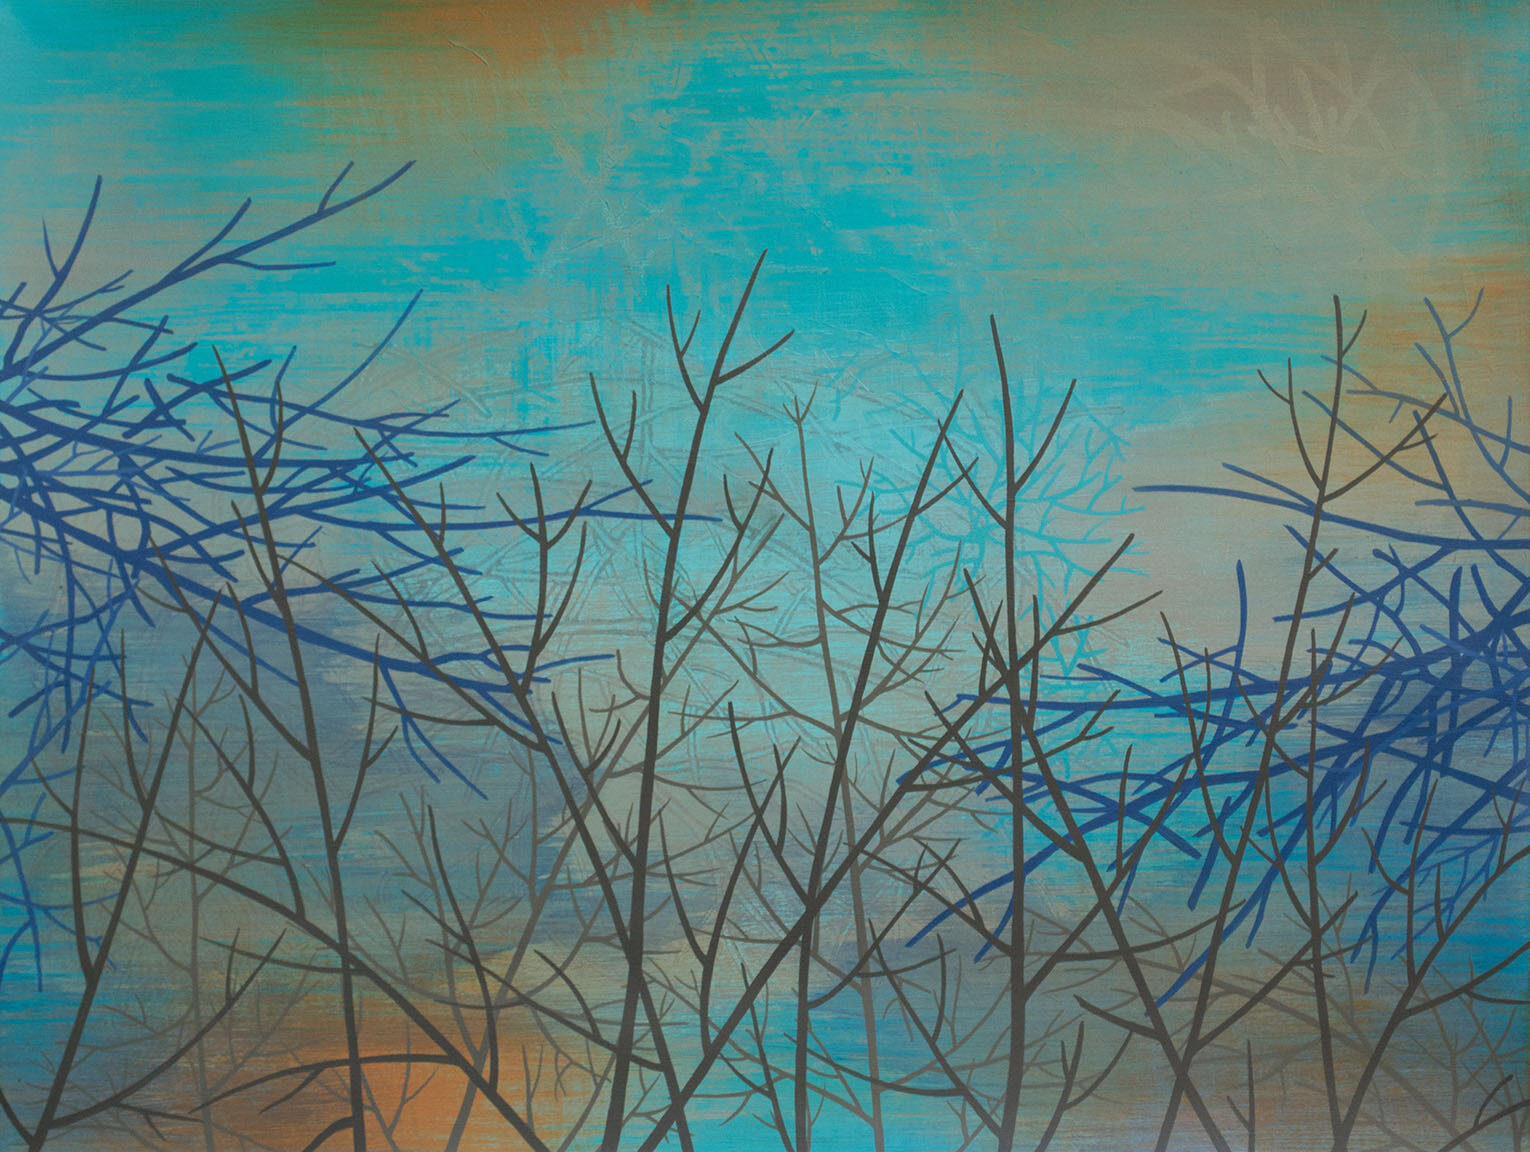   Wetland 84  Acrylic on paper, 19 x 24”    SOLD  